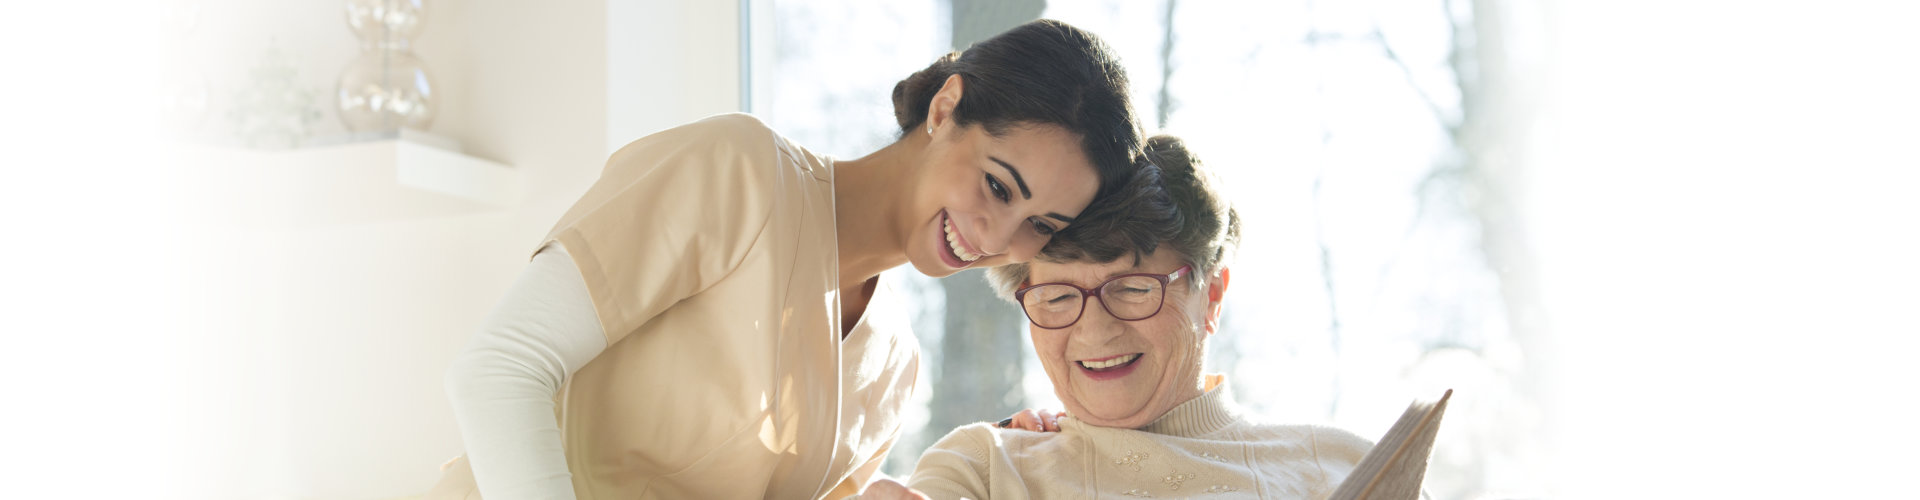 Smiling senior women watching photo album with happy caregiver